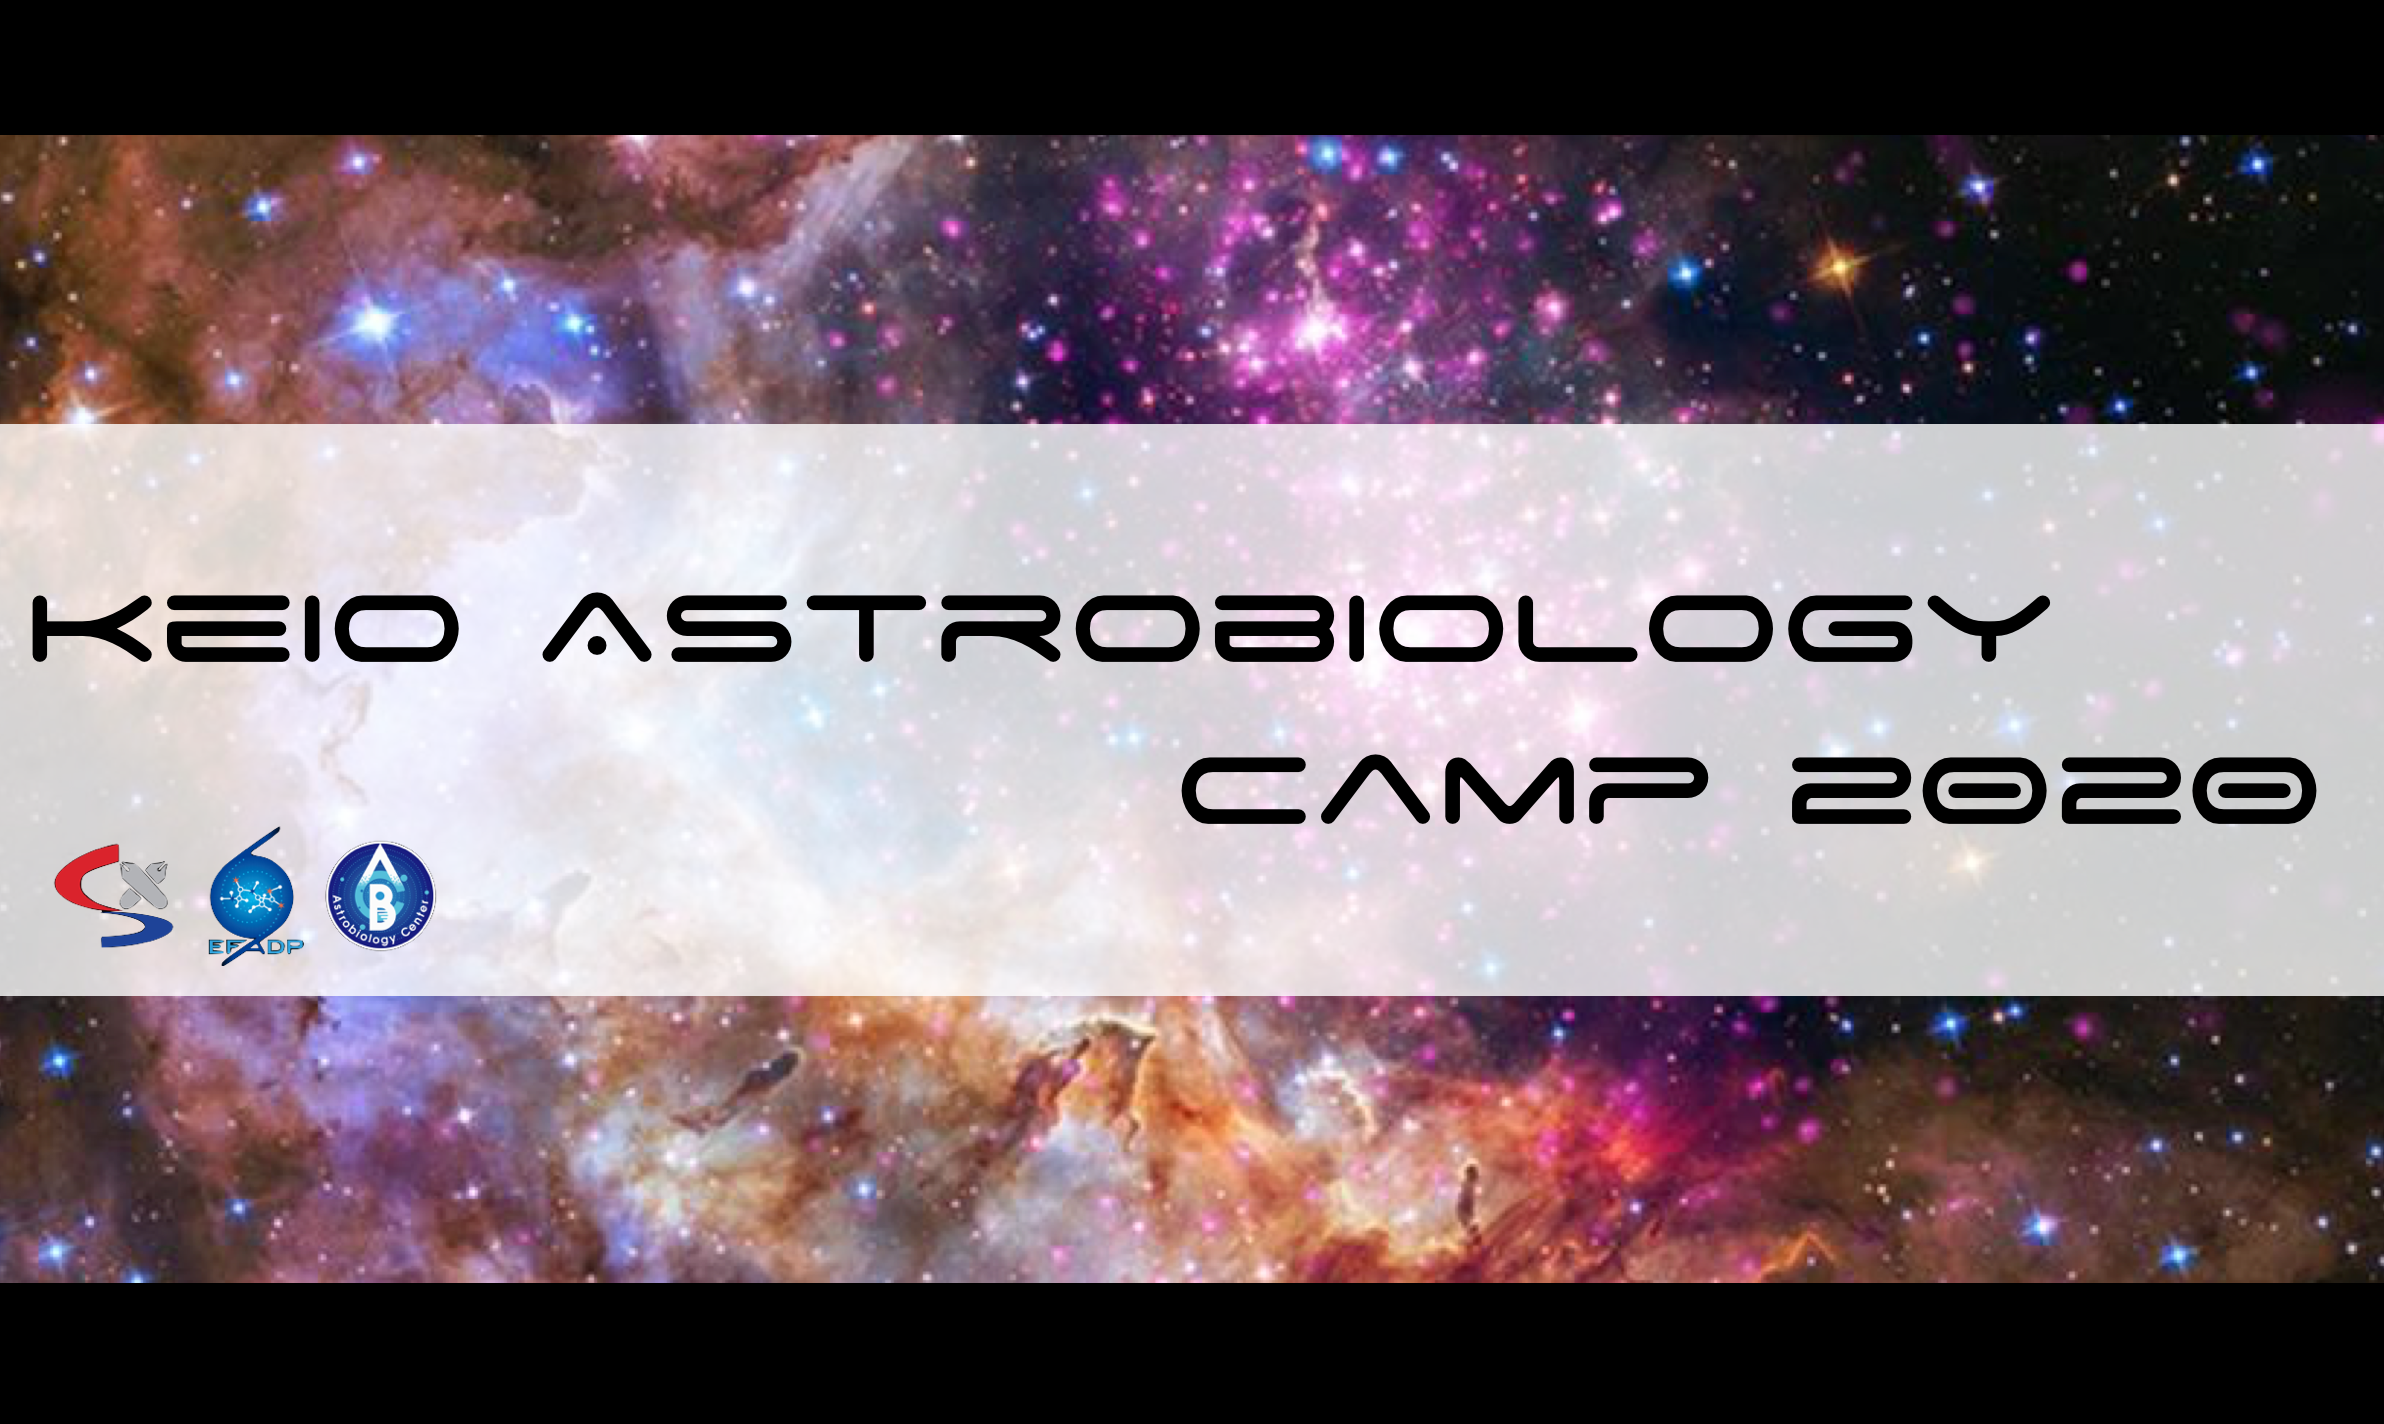 【NASA発の学問を学ぶ】慶應アストロバイオロジーキャンプ 2020